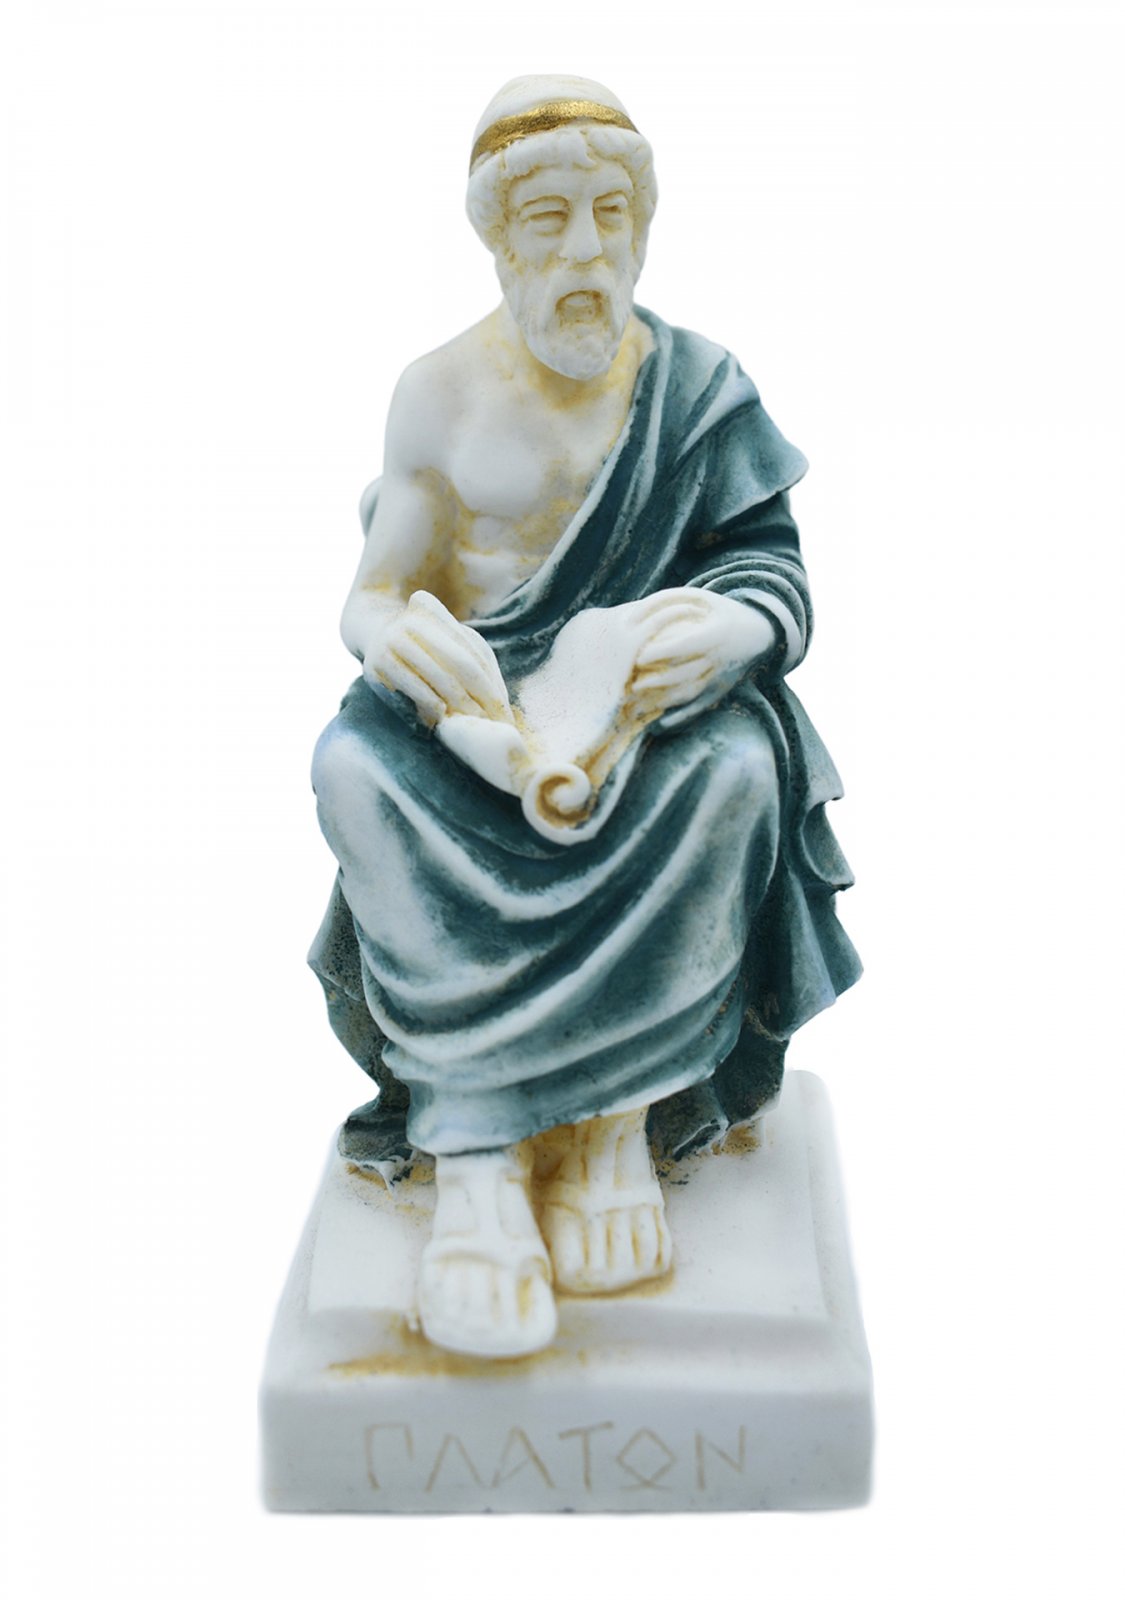 Plato greek alabaster statue with color